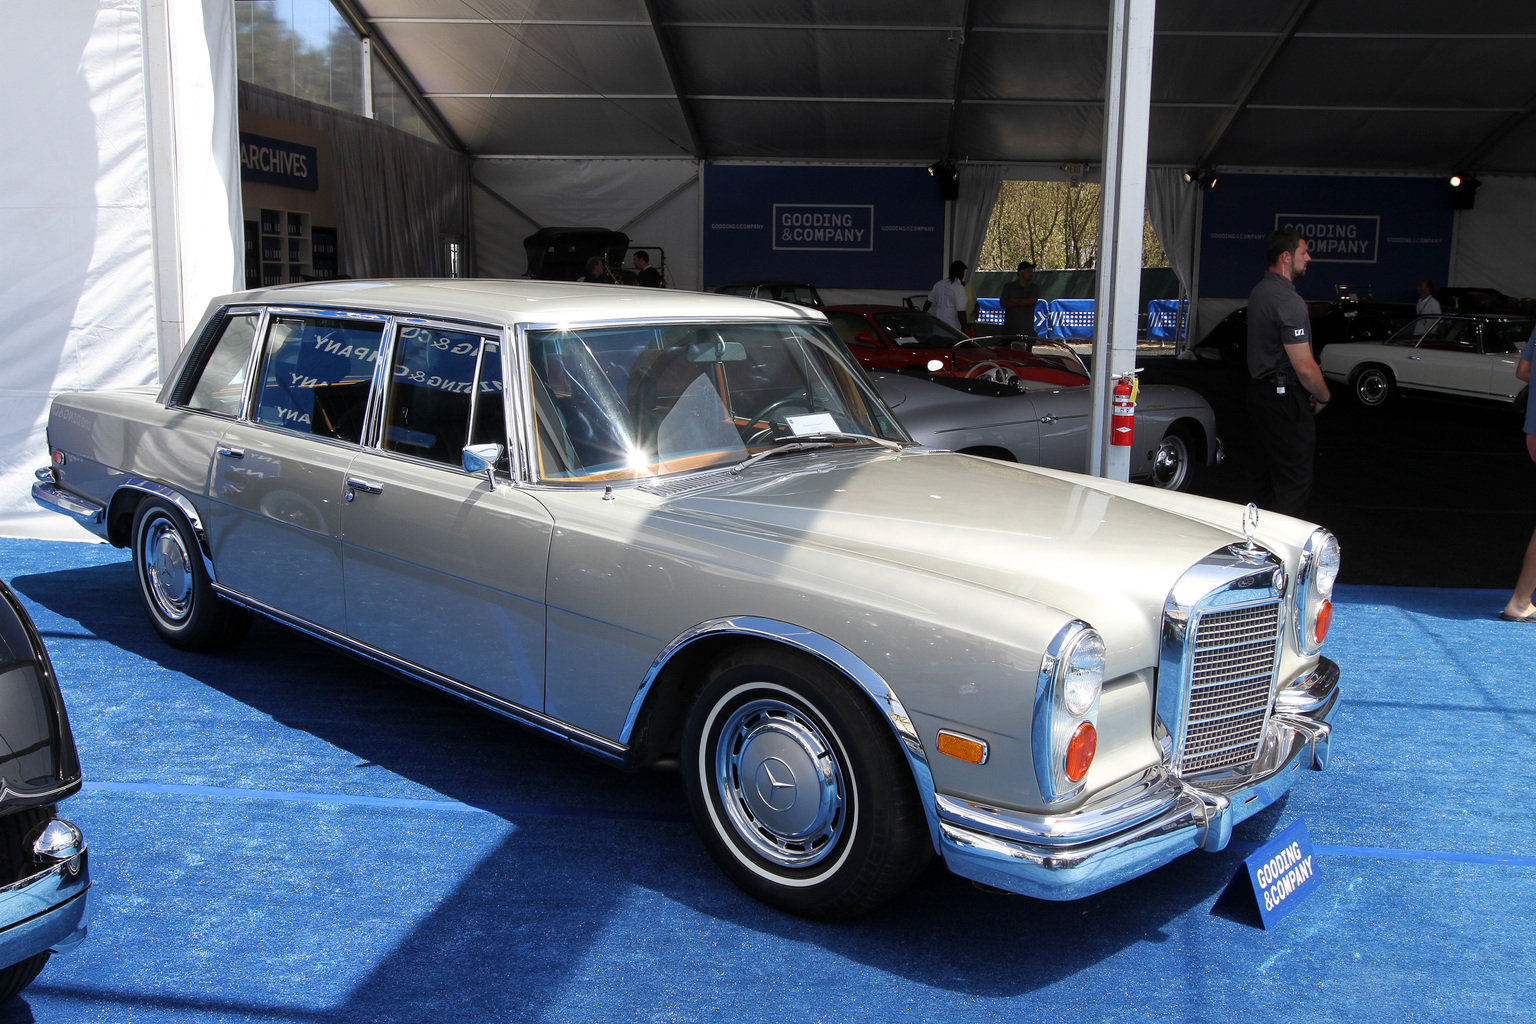 1963→1981 Mercedes-Benz 600 Limousine